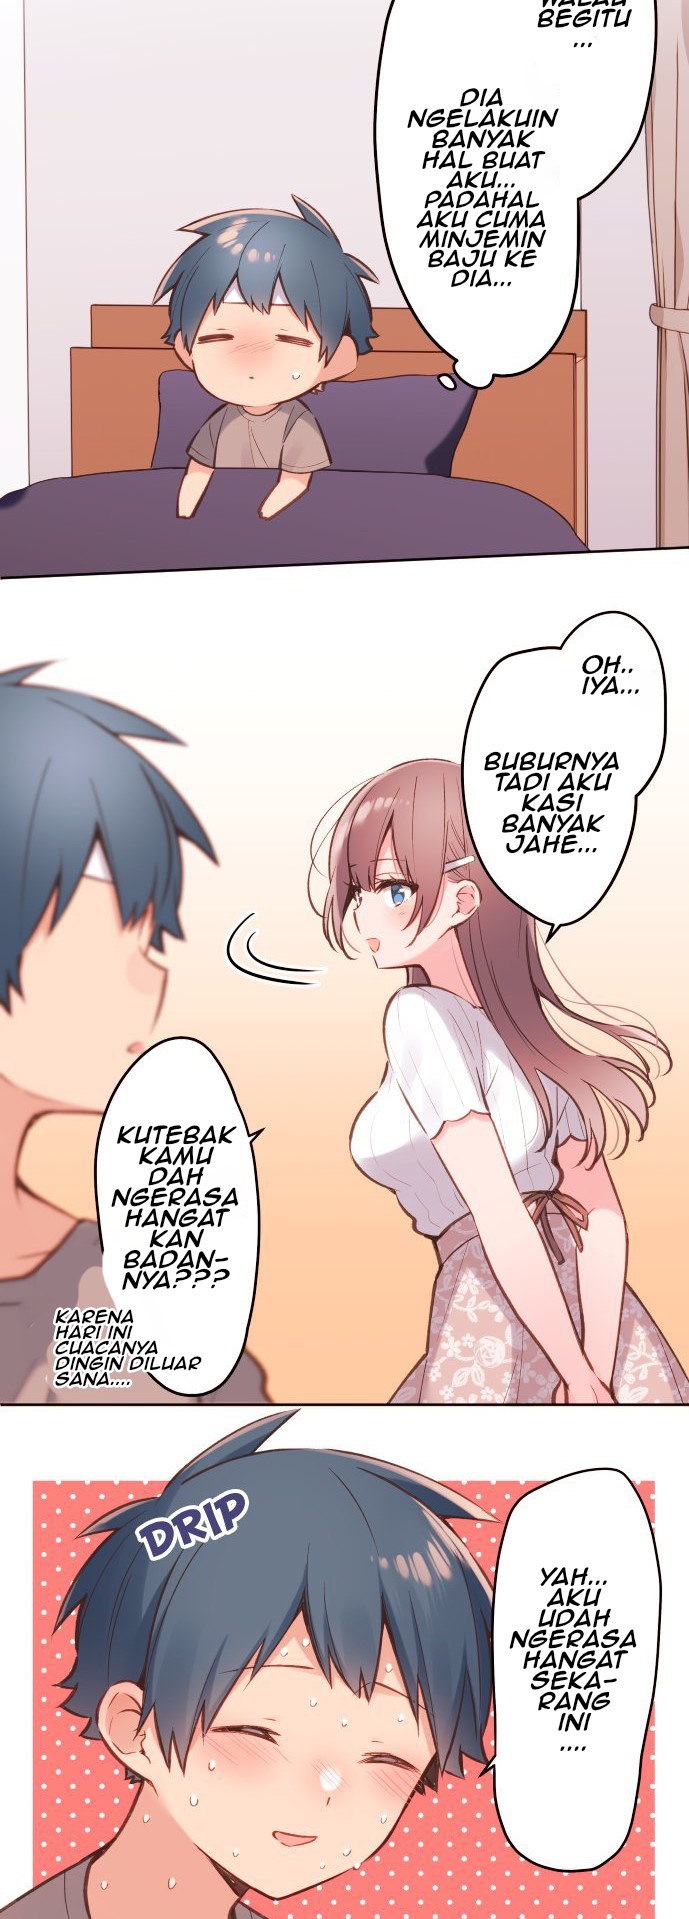 Waka-chan Is Flirty Again Chapter 41